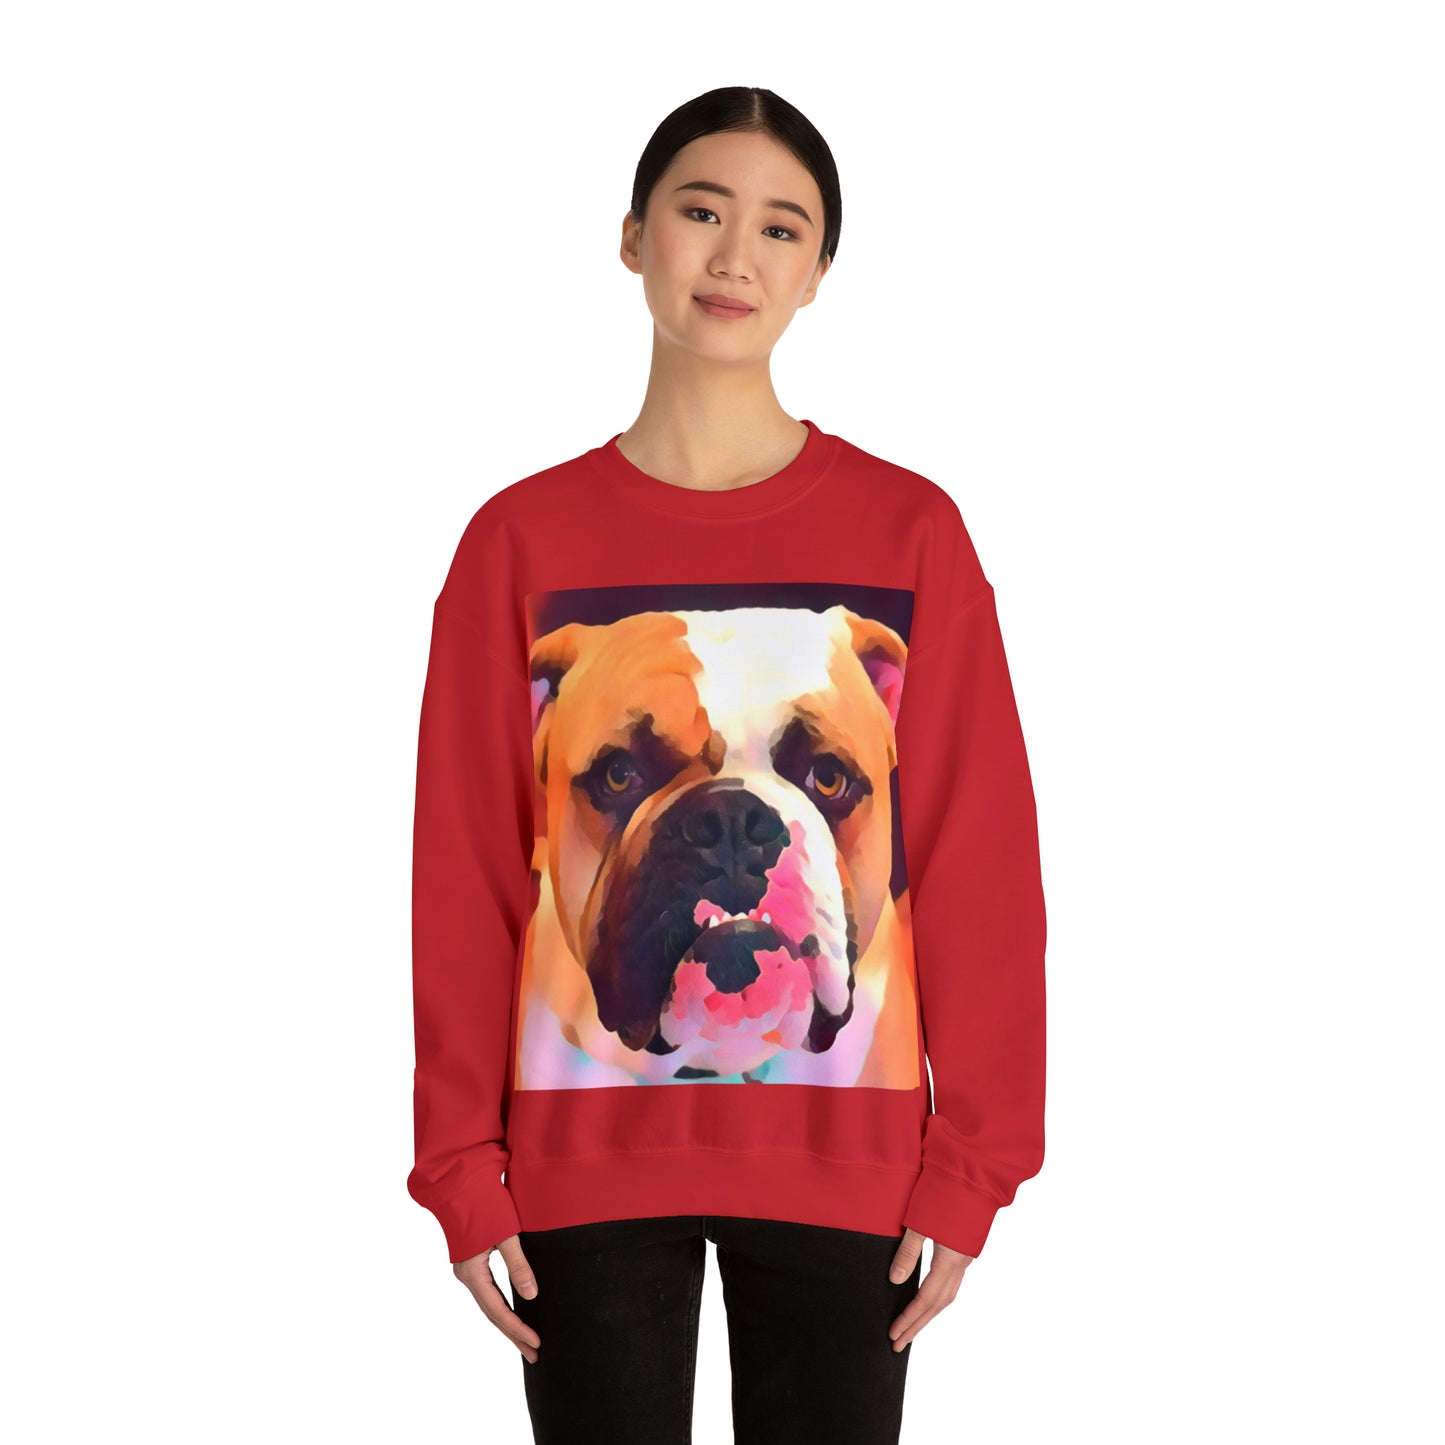 Pasca Bull Dog Red Sweatshirt